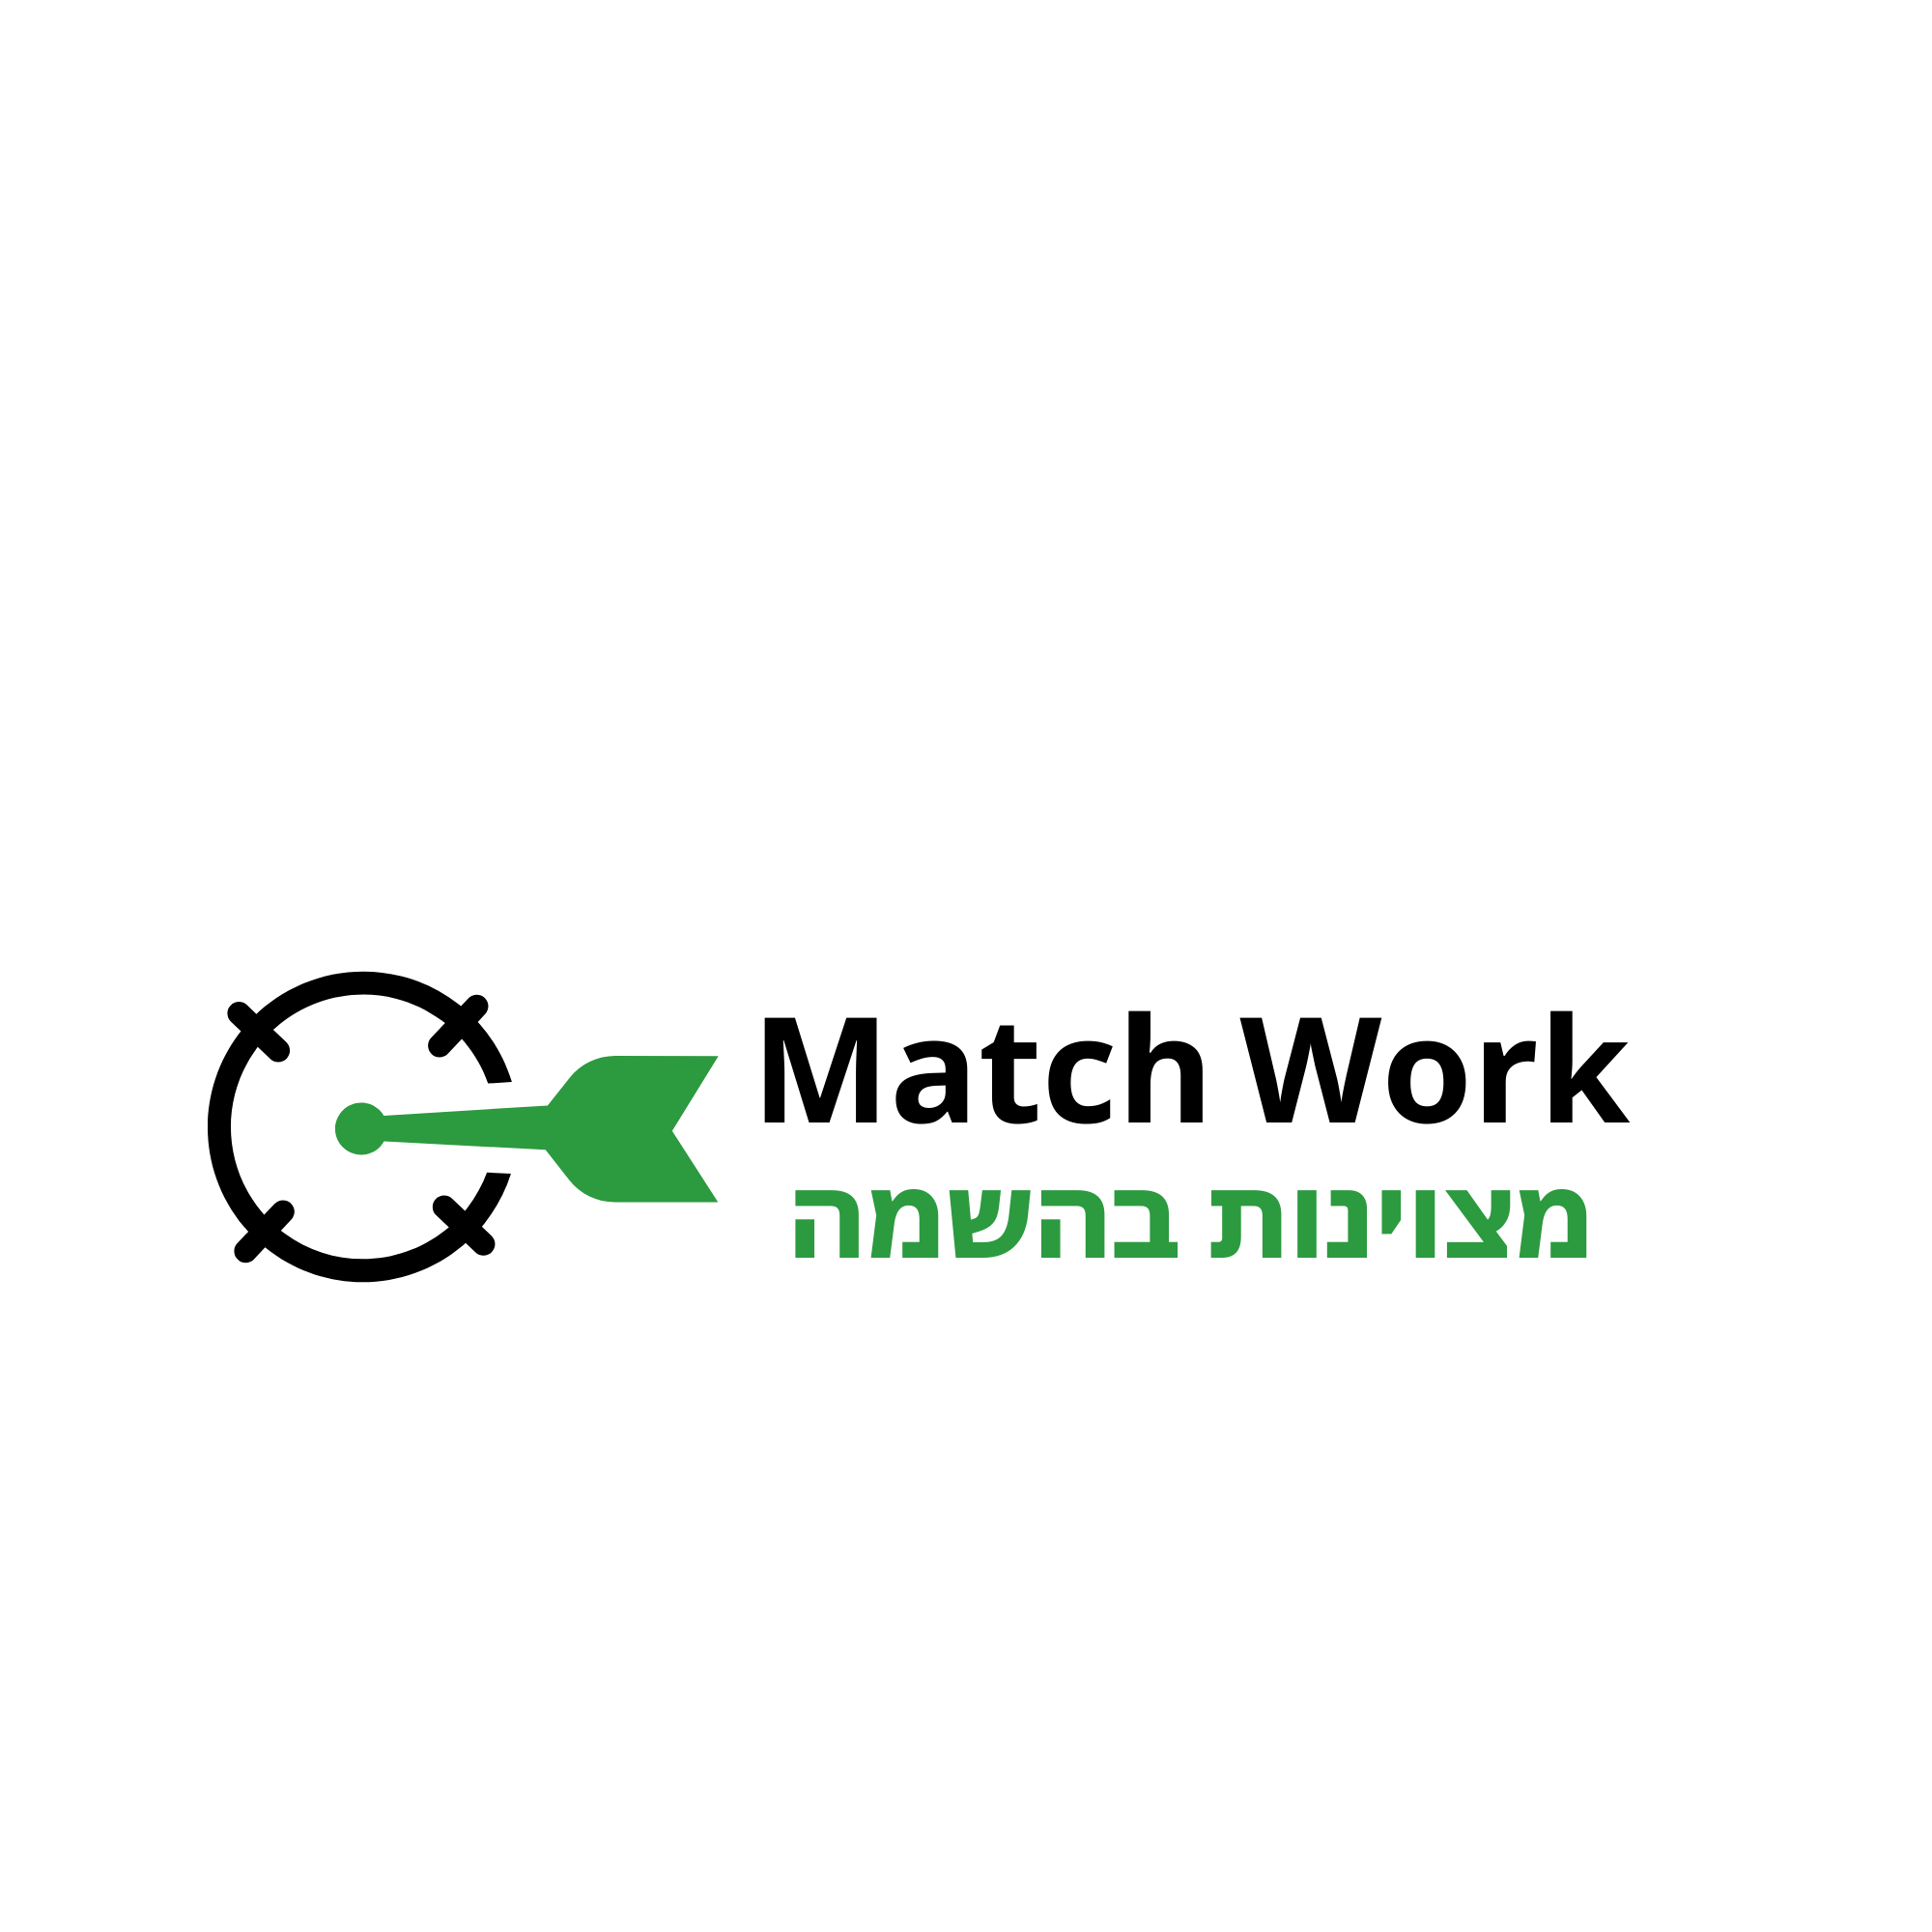 matchwork גיוס והשמה.logo